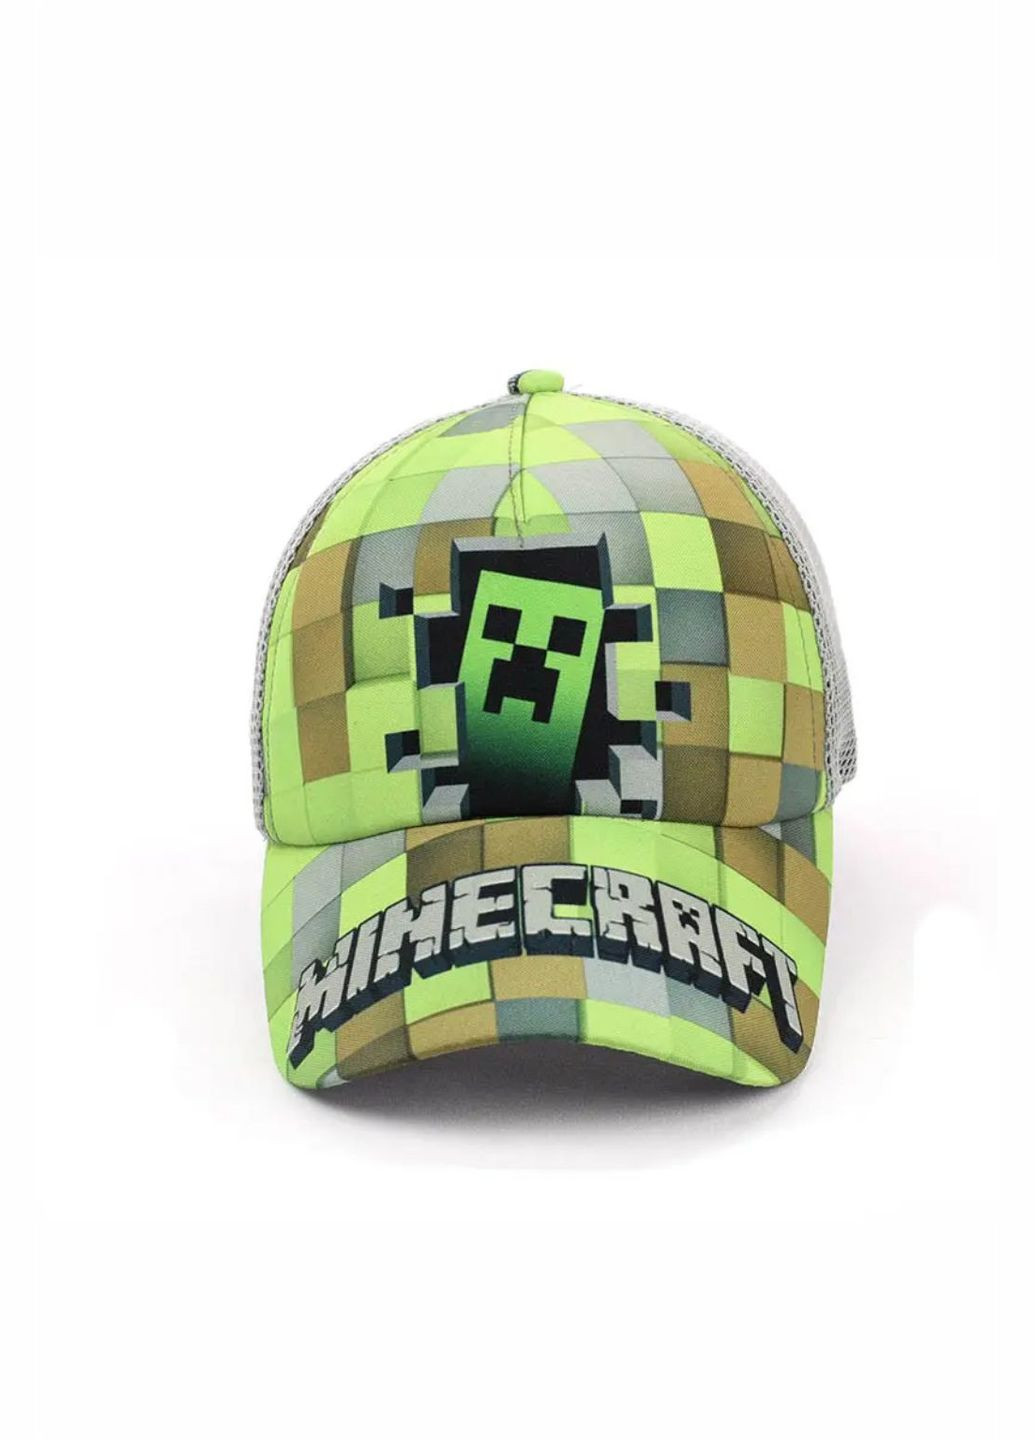 Кепка детская с сеткой Майнкрафт / Minecraft No Brand дитяча кепка (279381218)